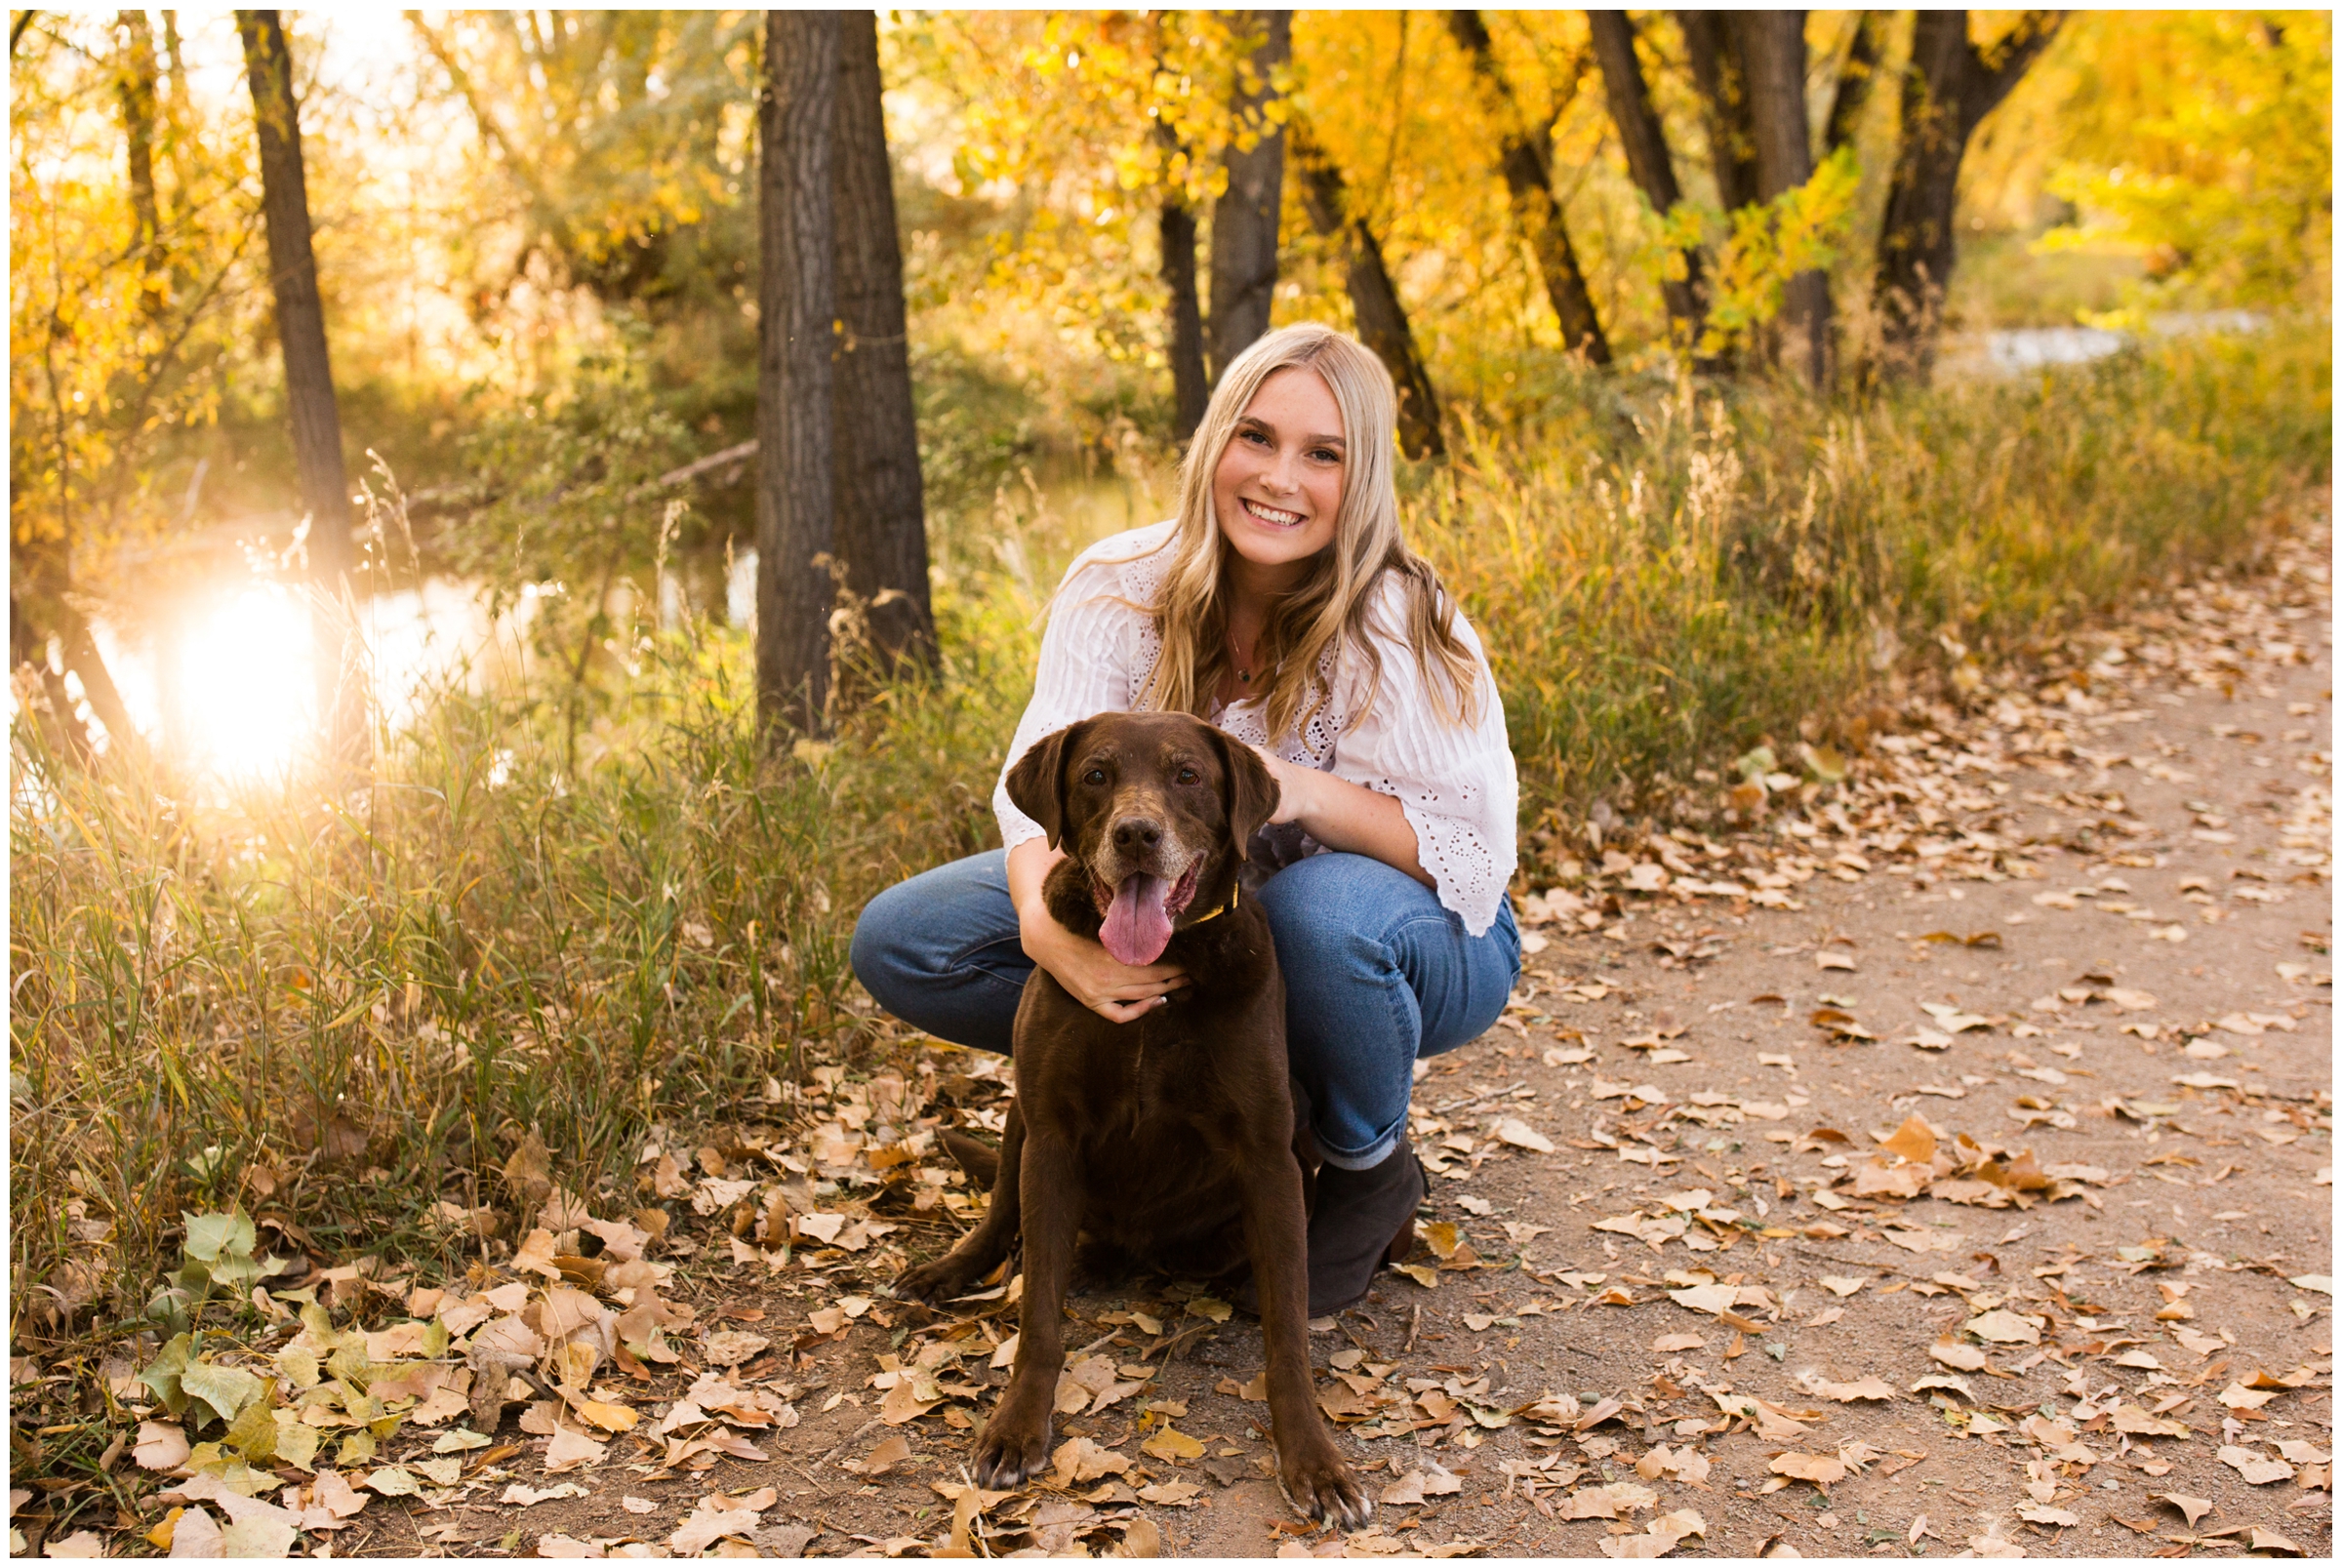 Colorado senior photos with your dog 